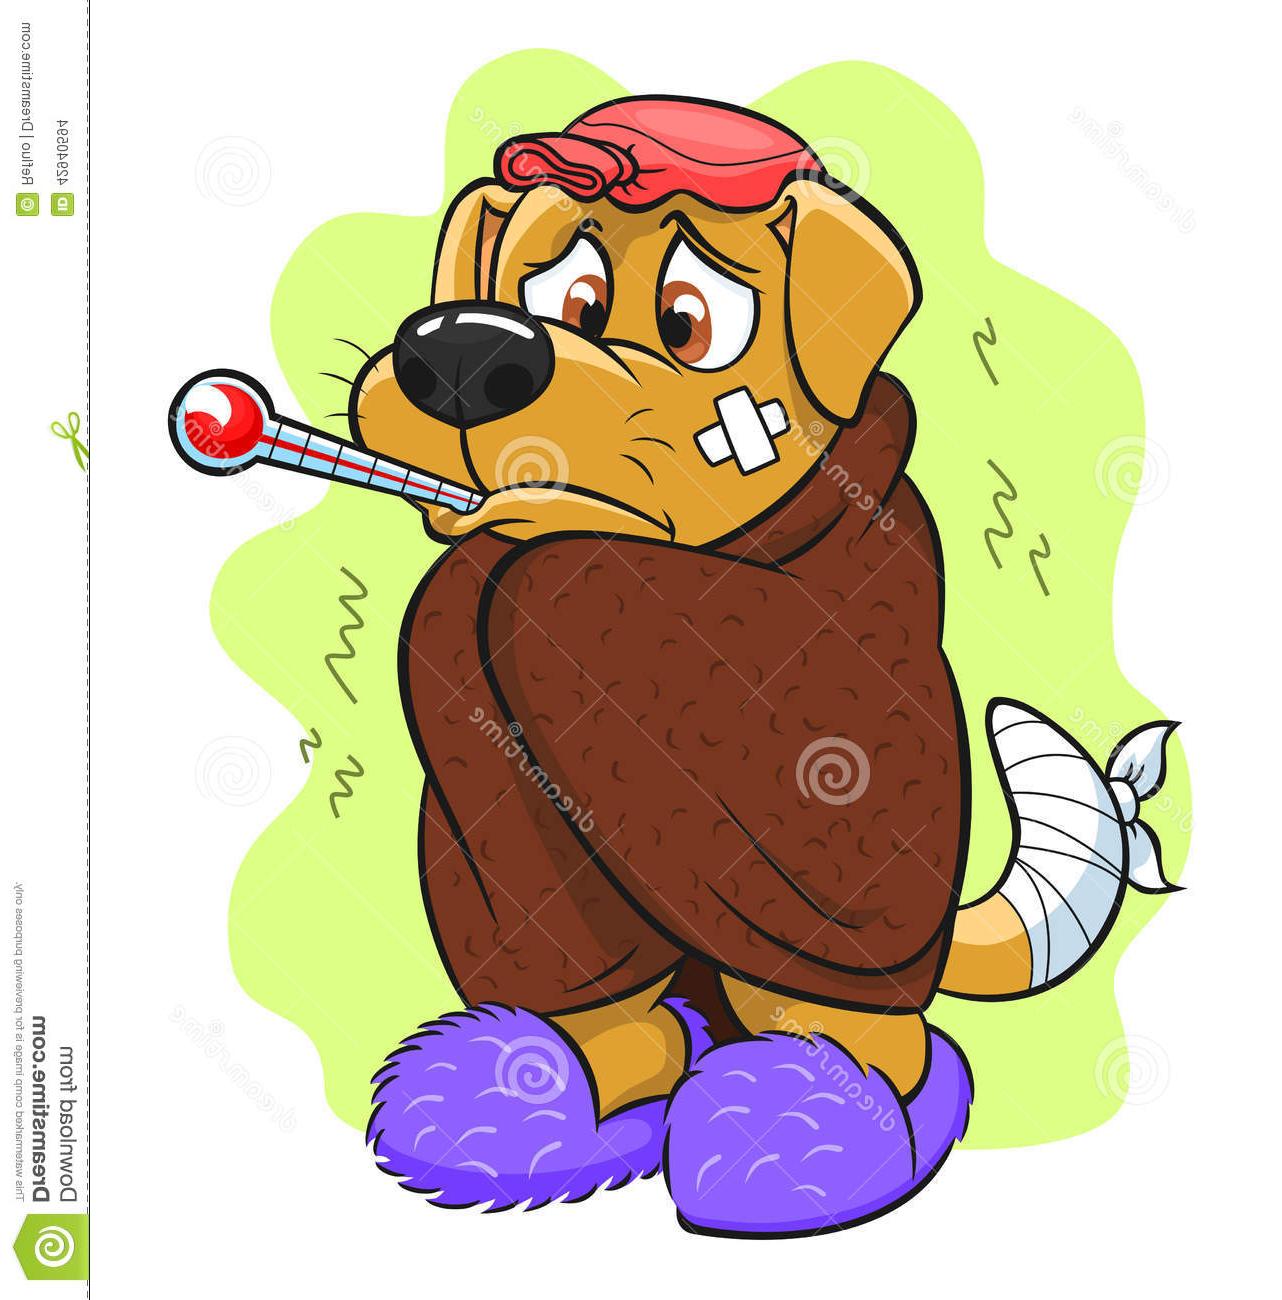 Top Sick Dog Cartoon Vector File Free » Free Vector Art.